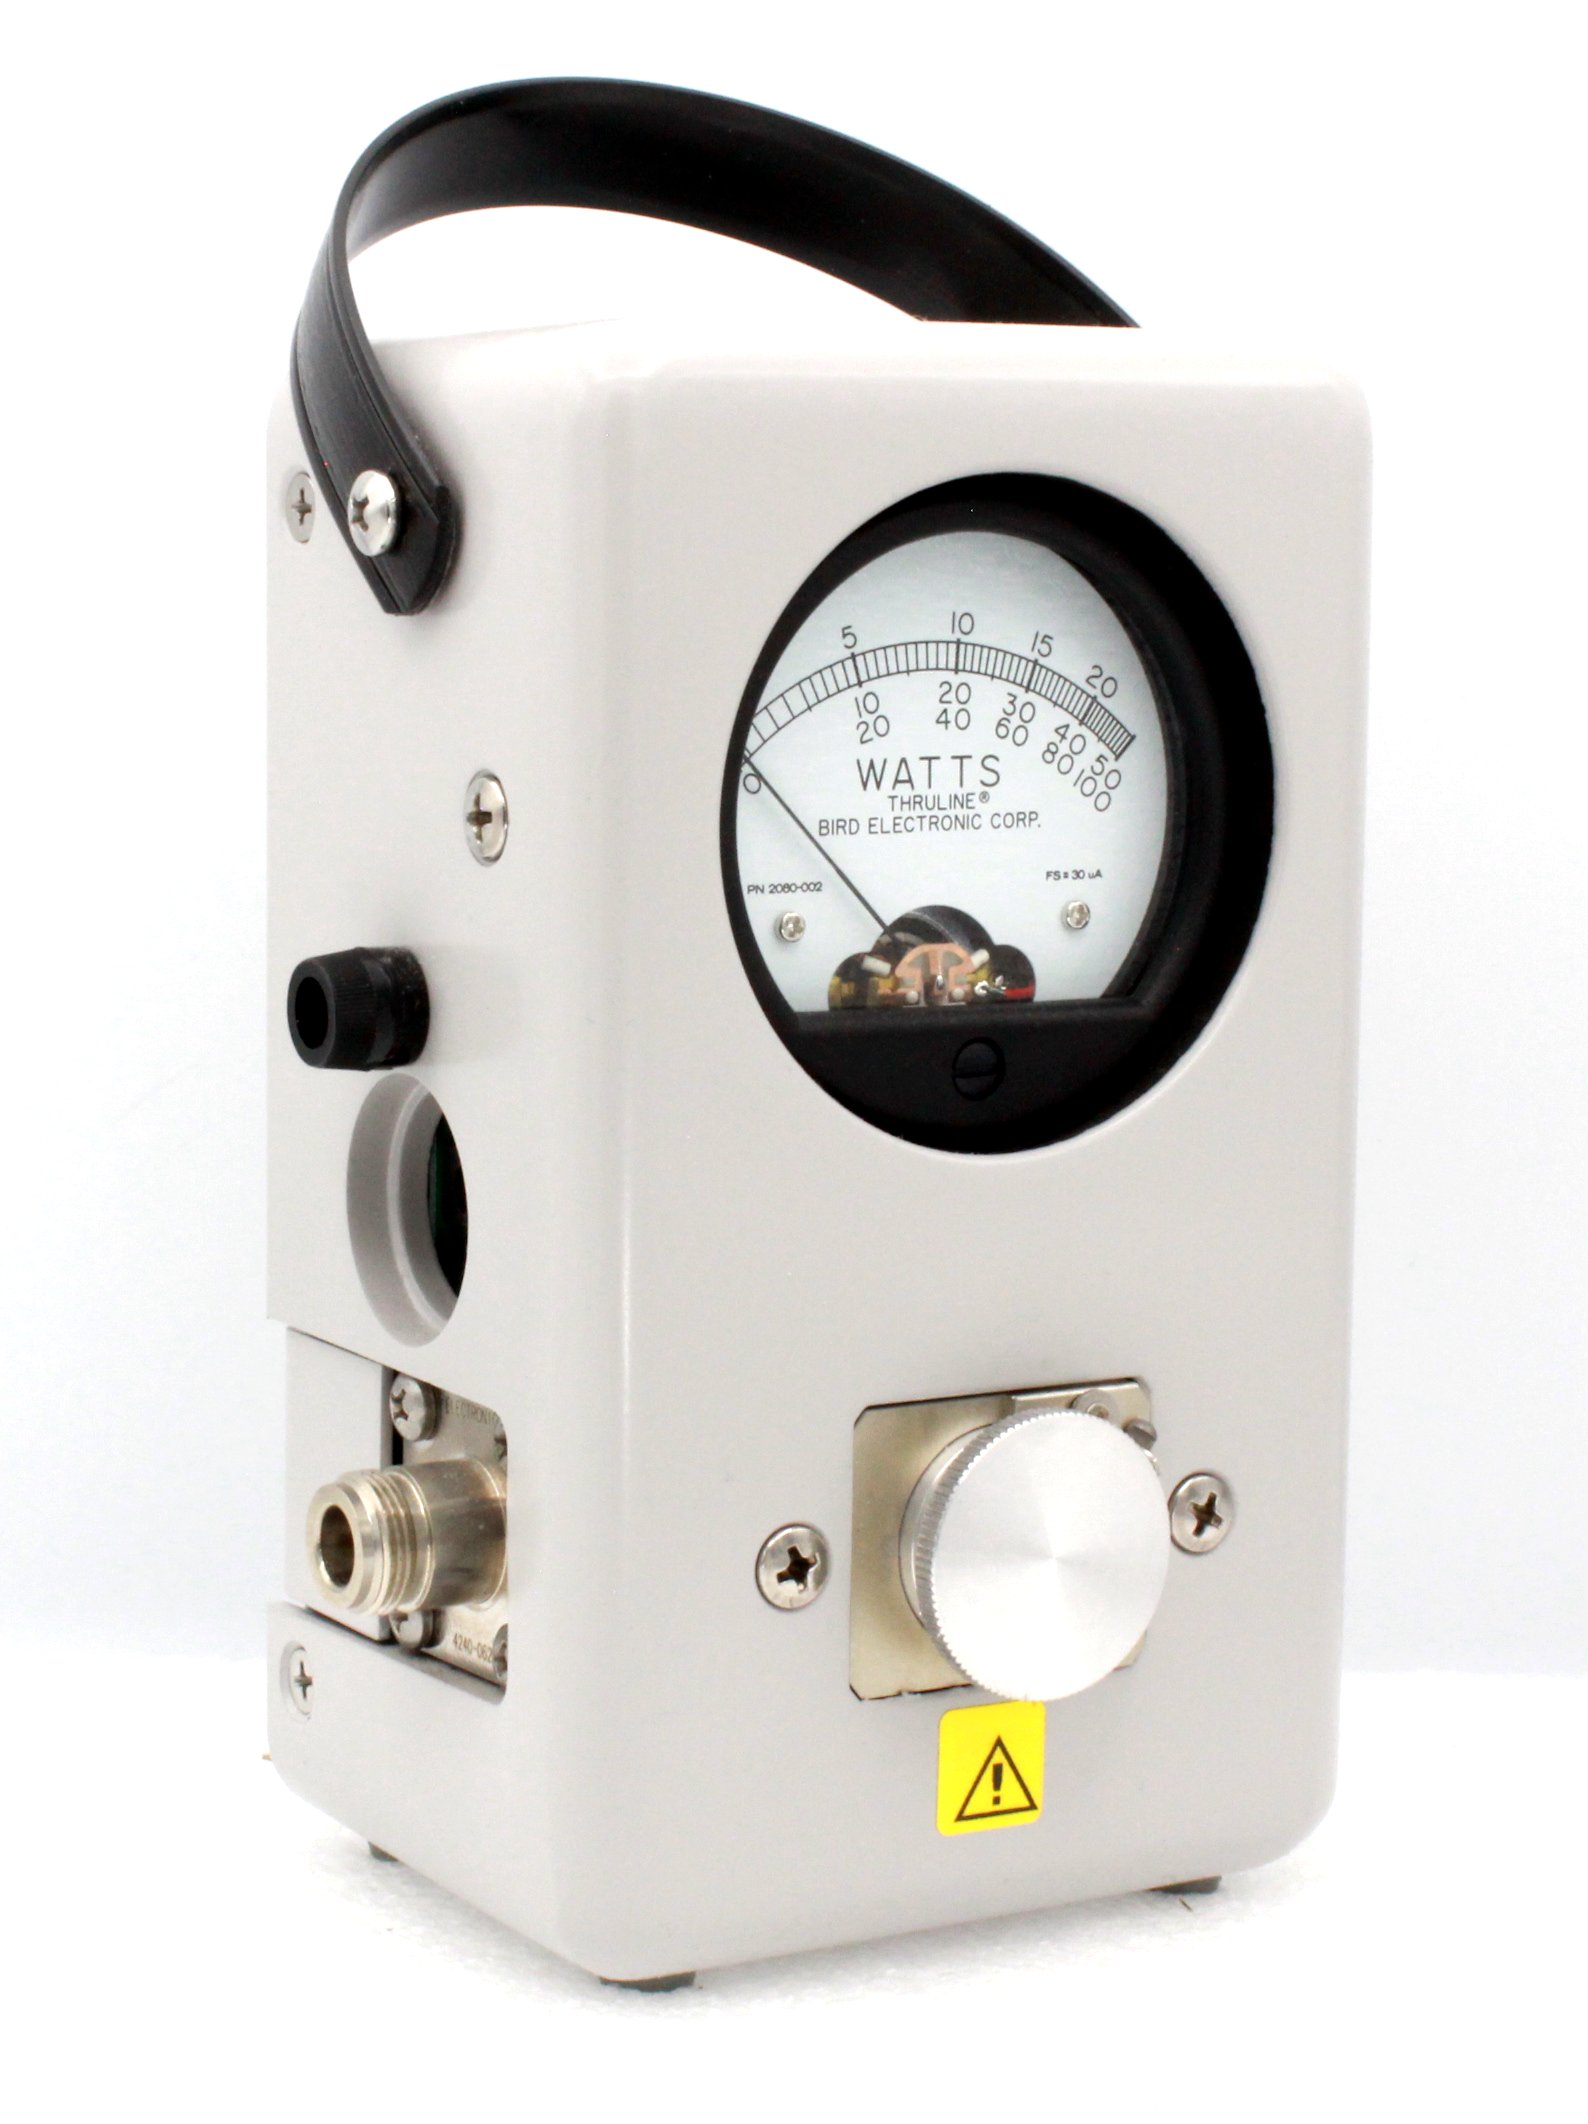 Bird 43P\ Peak/Average Thruline RF Wattmeter (Demo Unit) In New Condition #223806427 Bird 43 Wattmeter Used